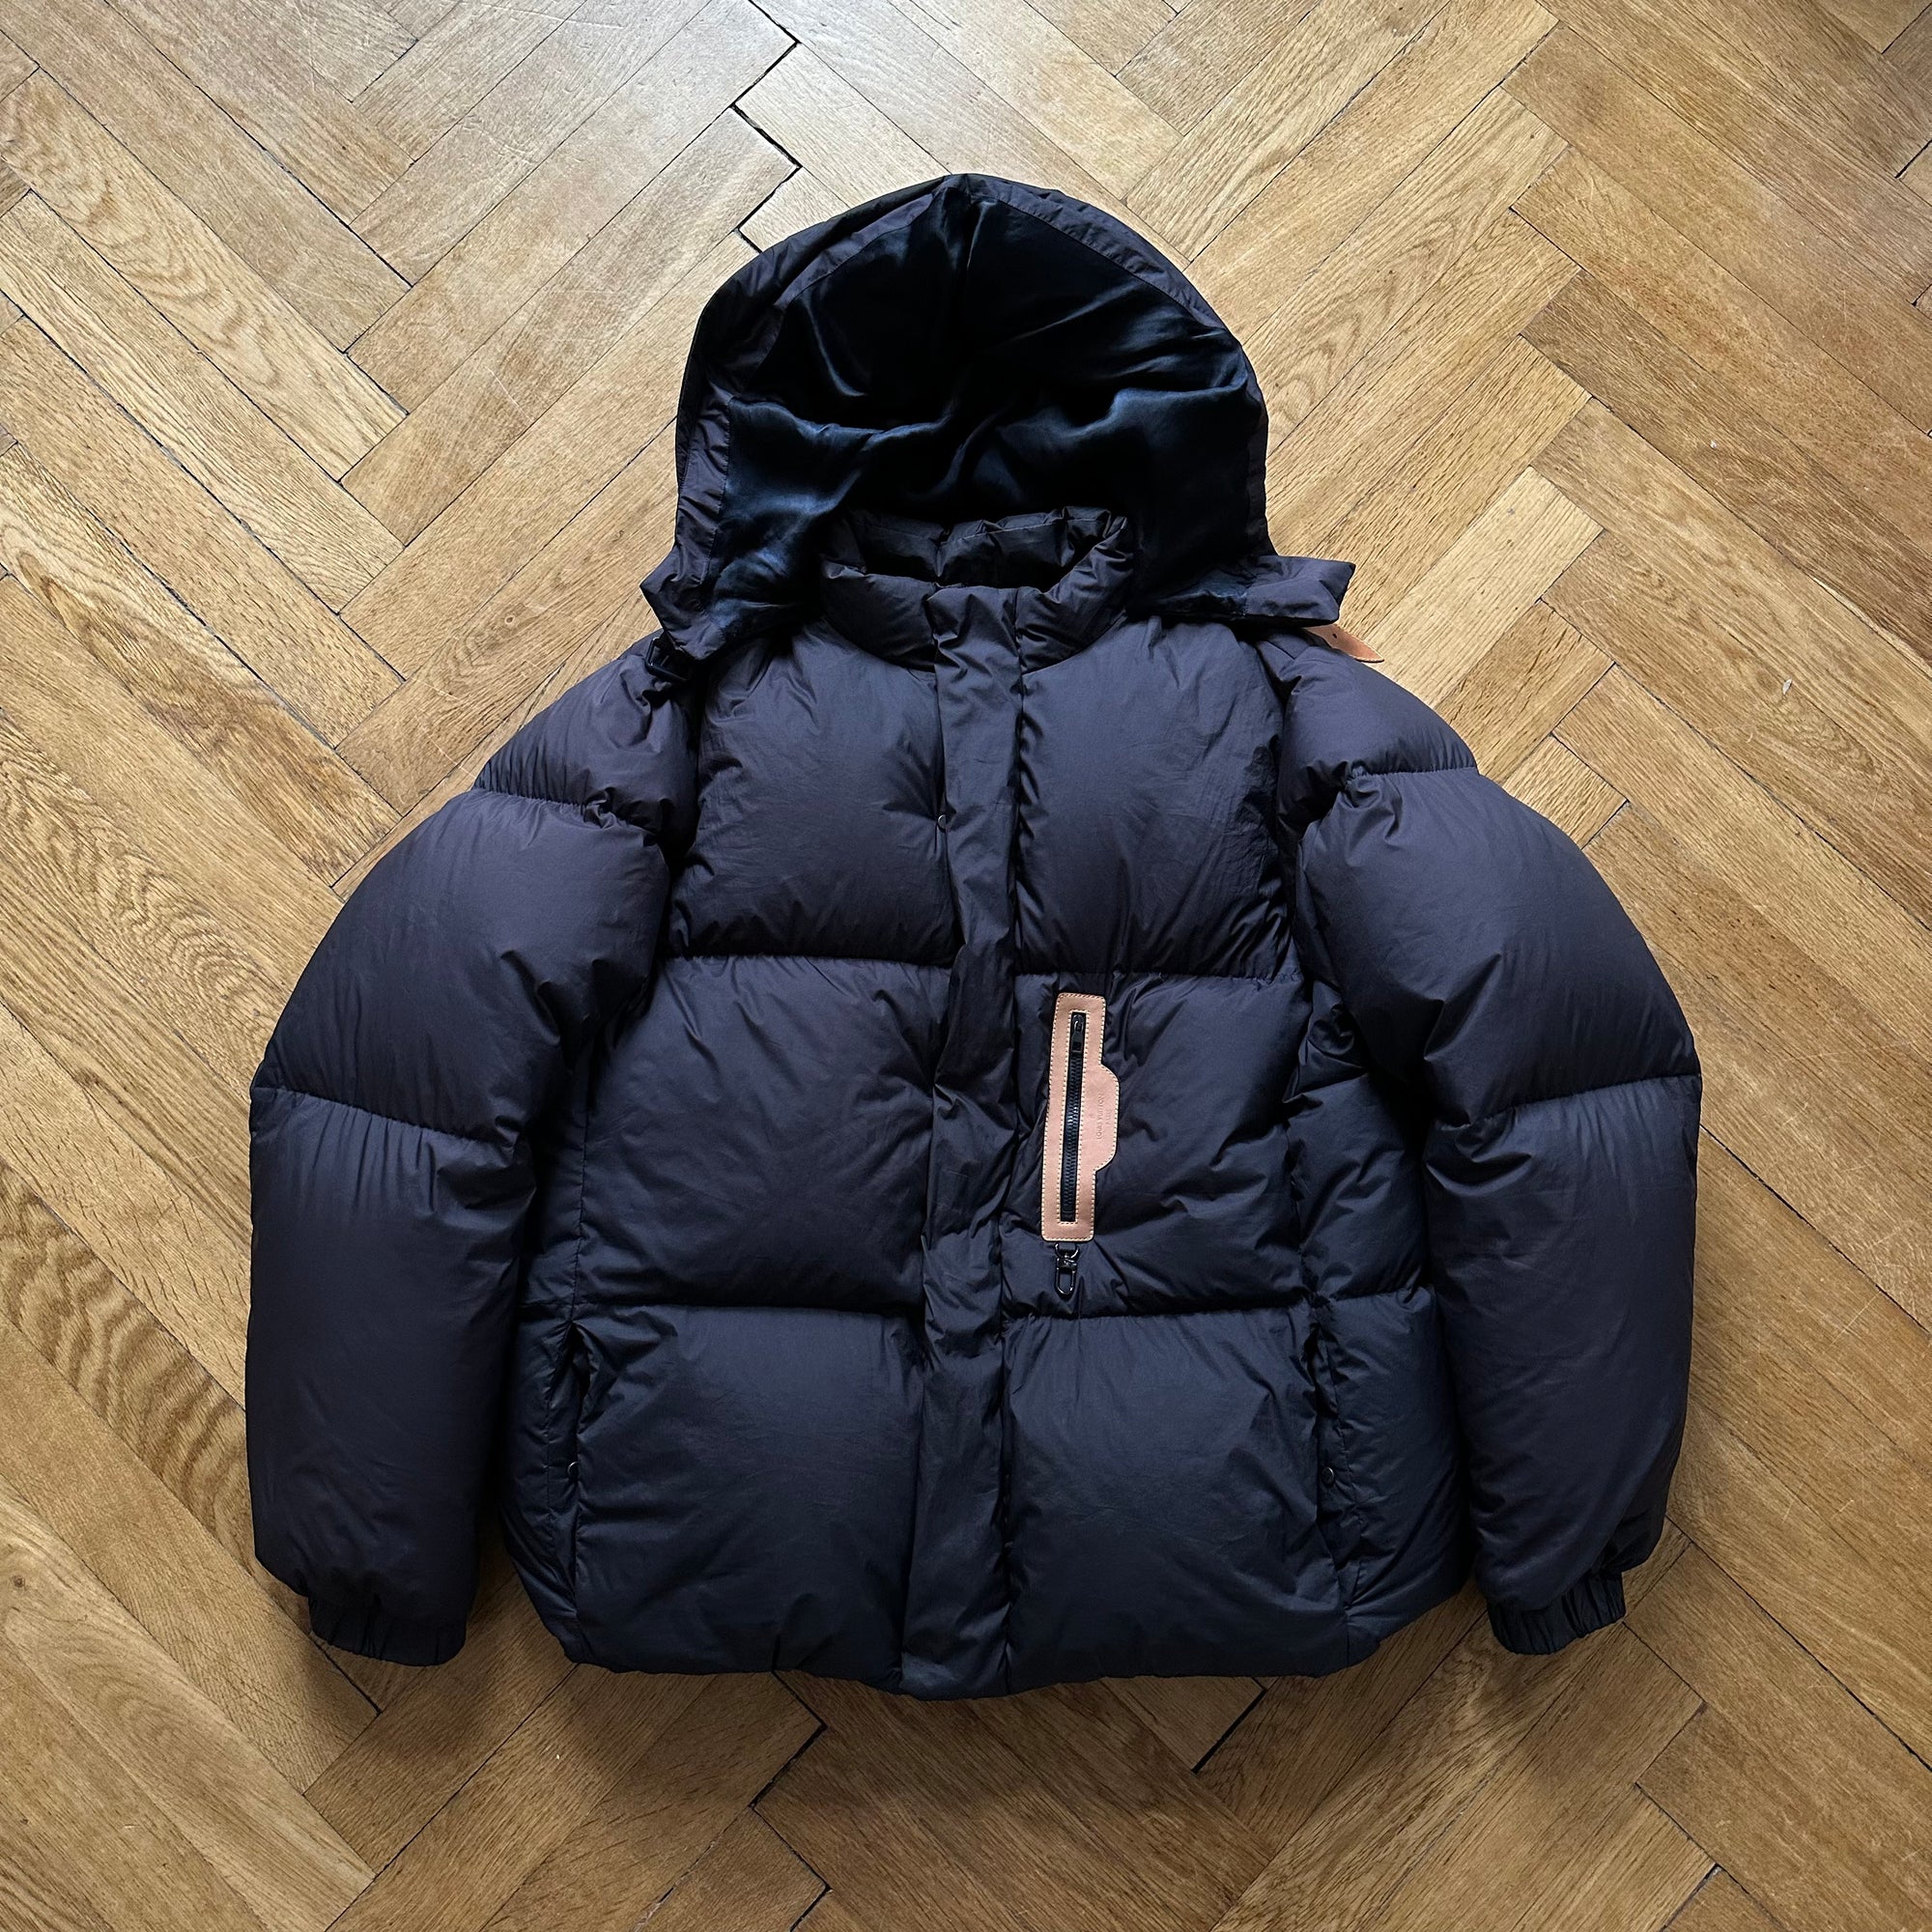 vuitton winter jacket